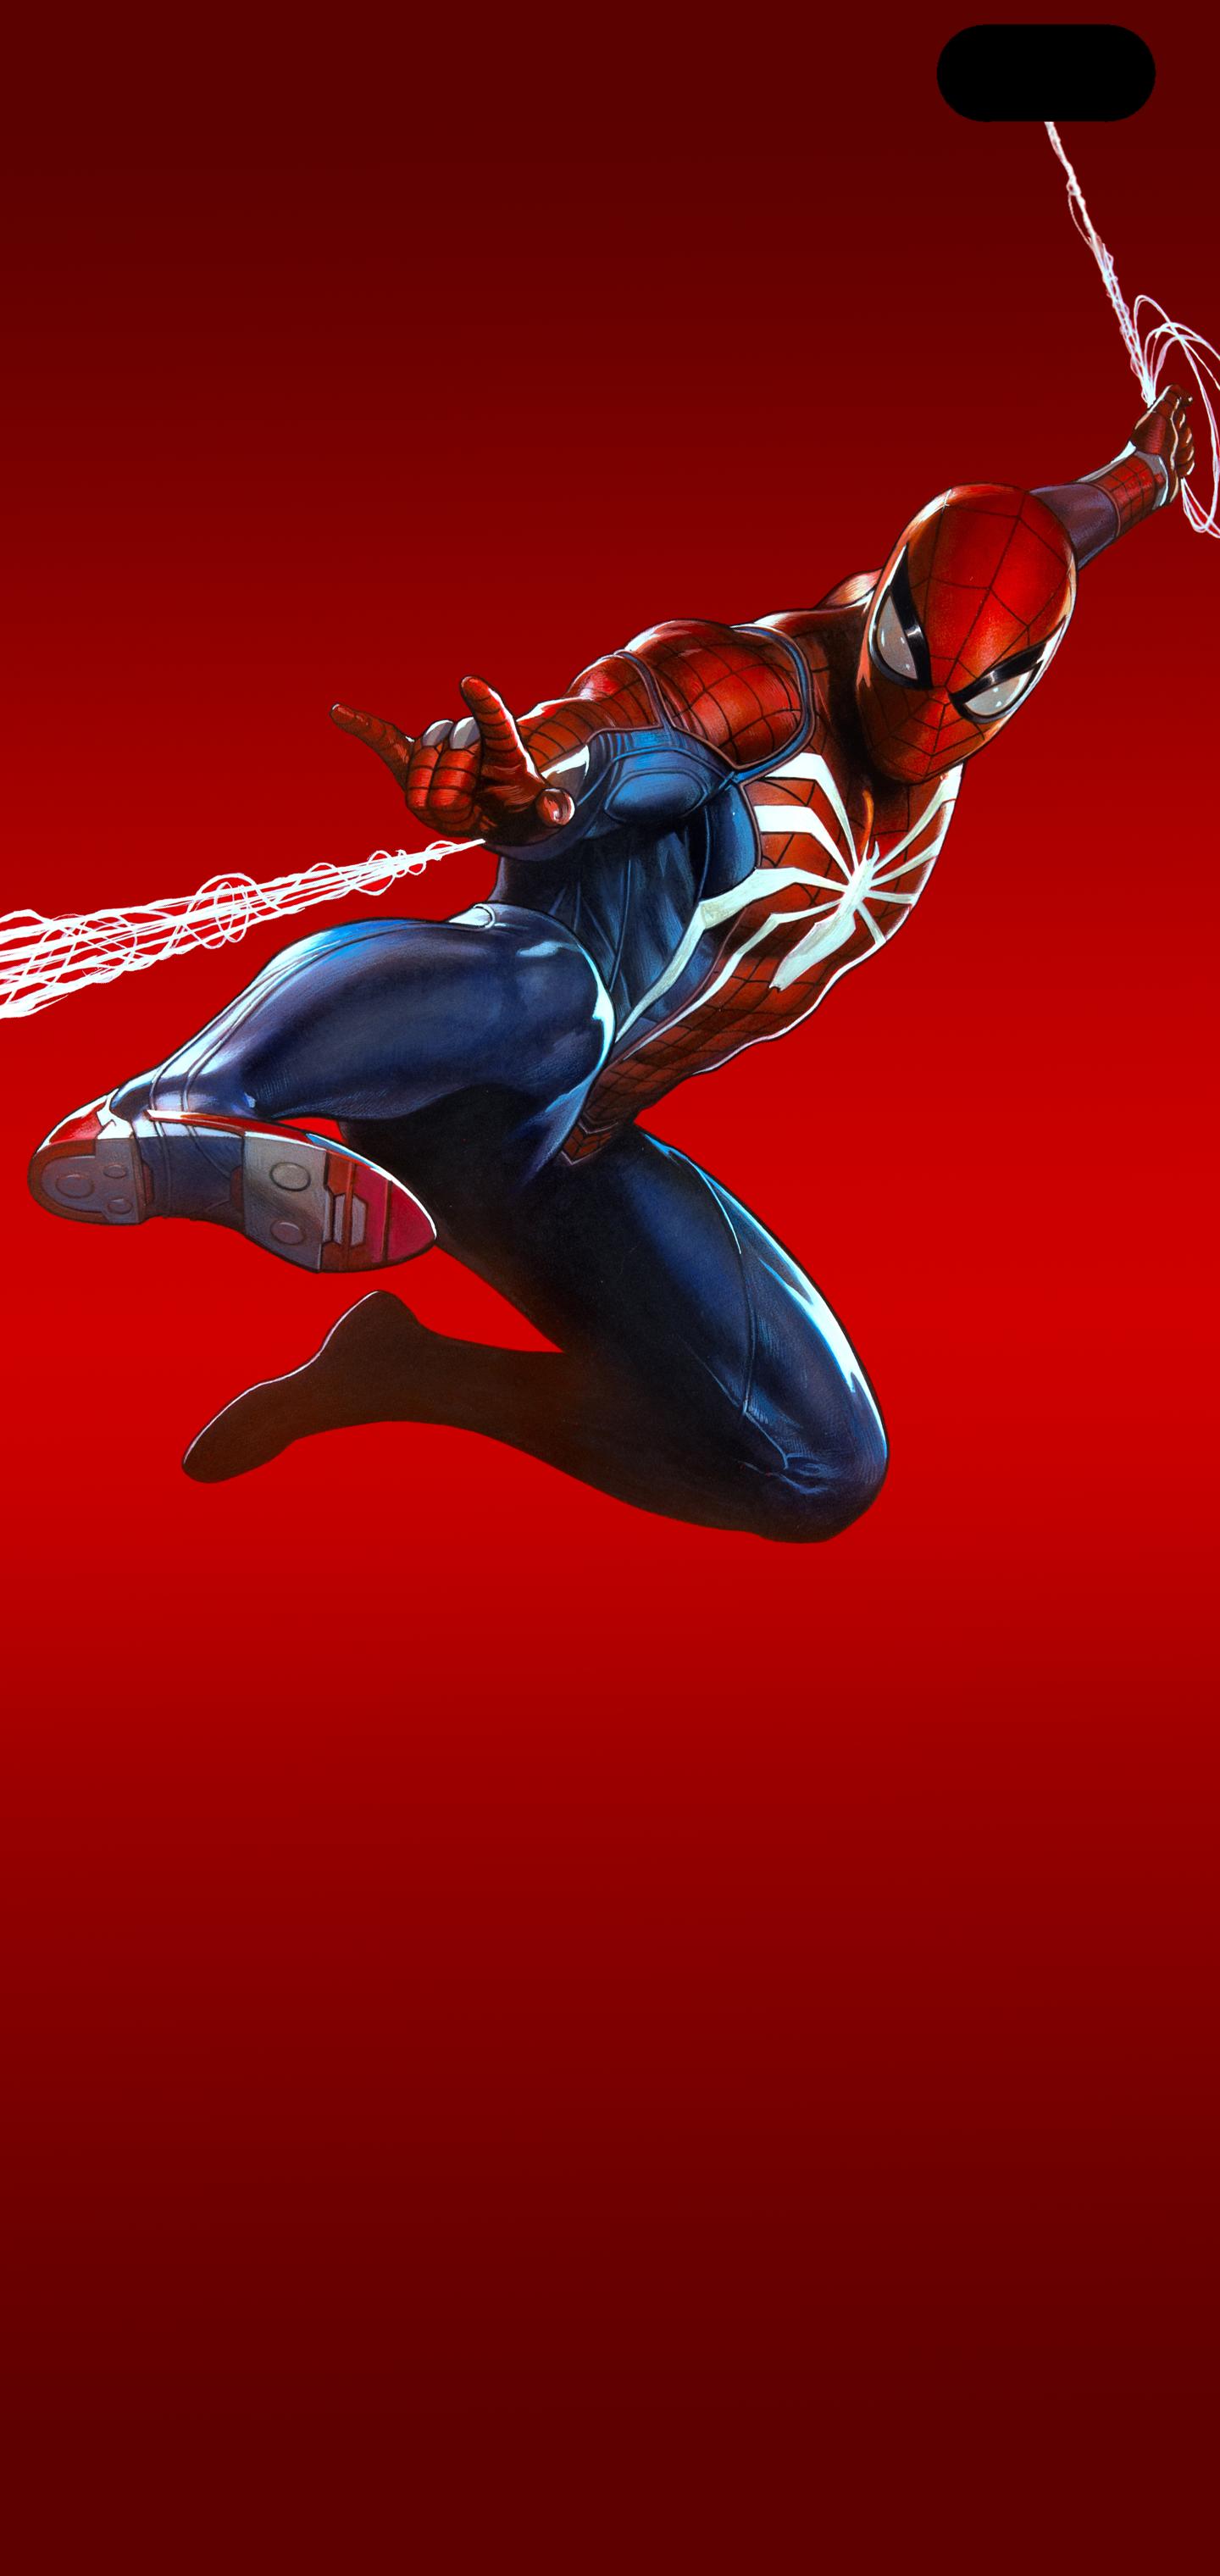 fond d'écran spiderman,super héros,personnage fictif